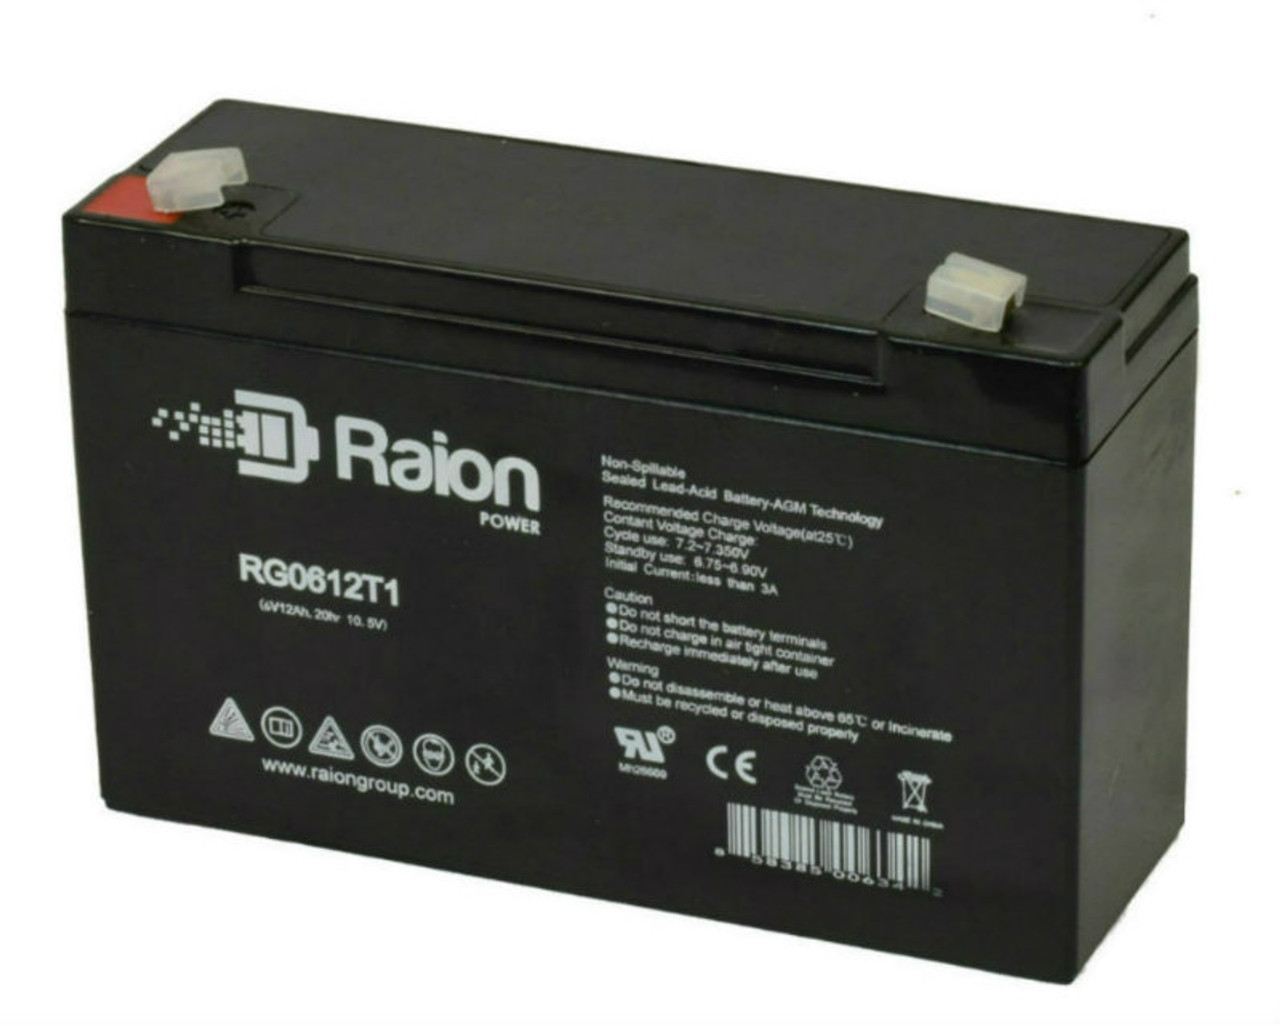 Raion Power RG06120T1 6V 12Ah Replacement UPS Battery Cartridge for Eaton Powerware NetUPS SE 1000